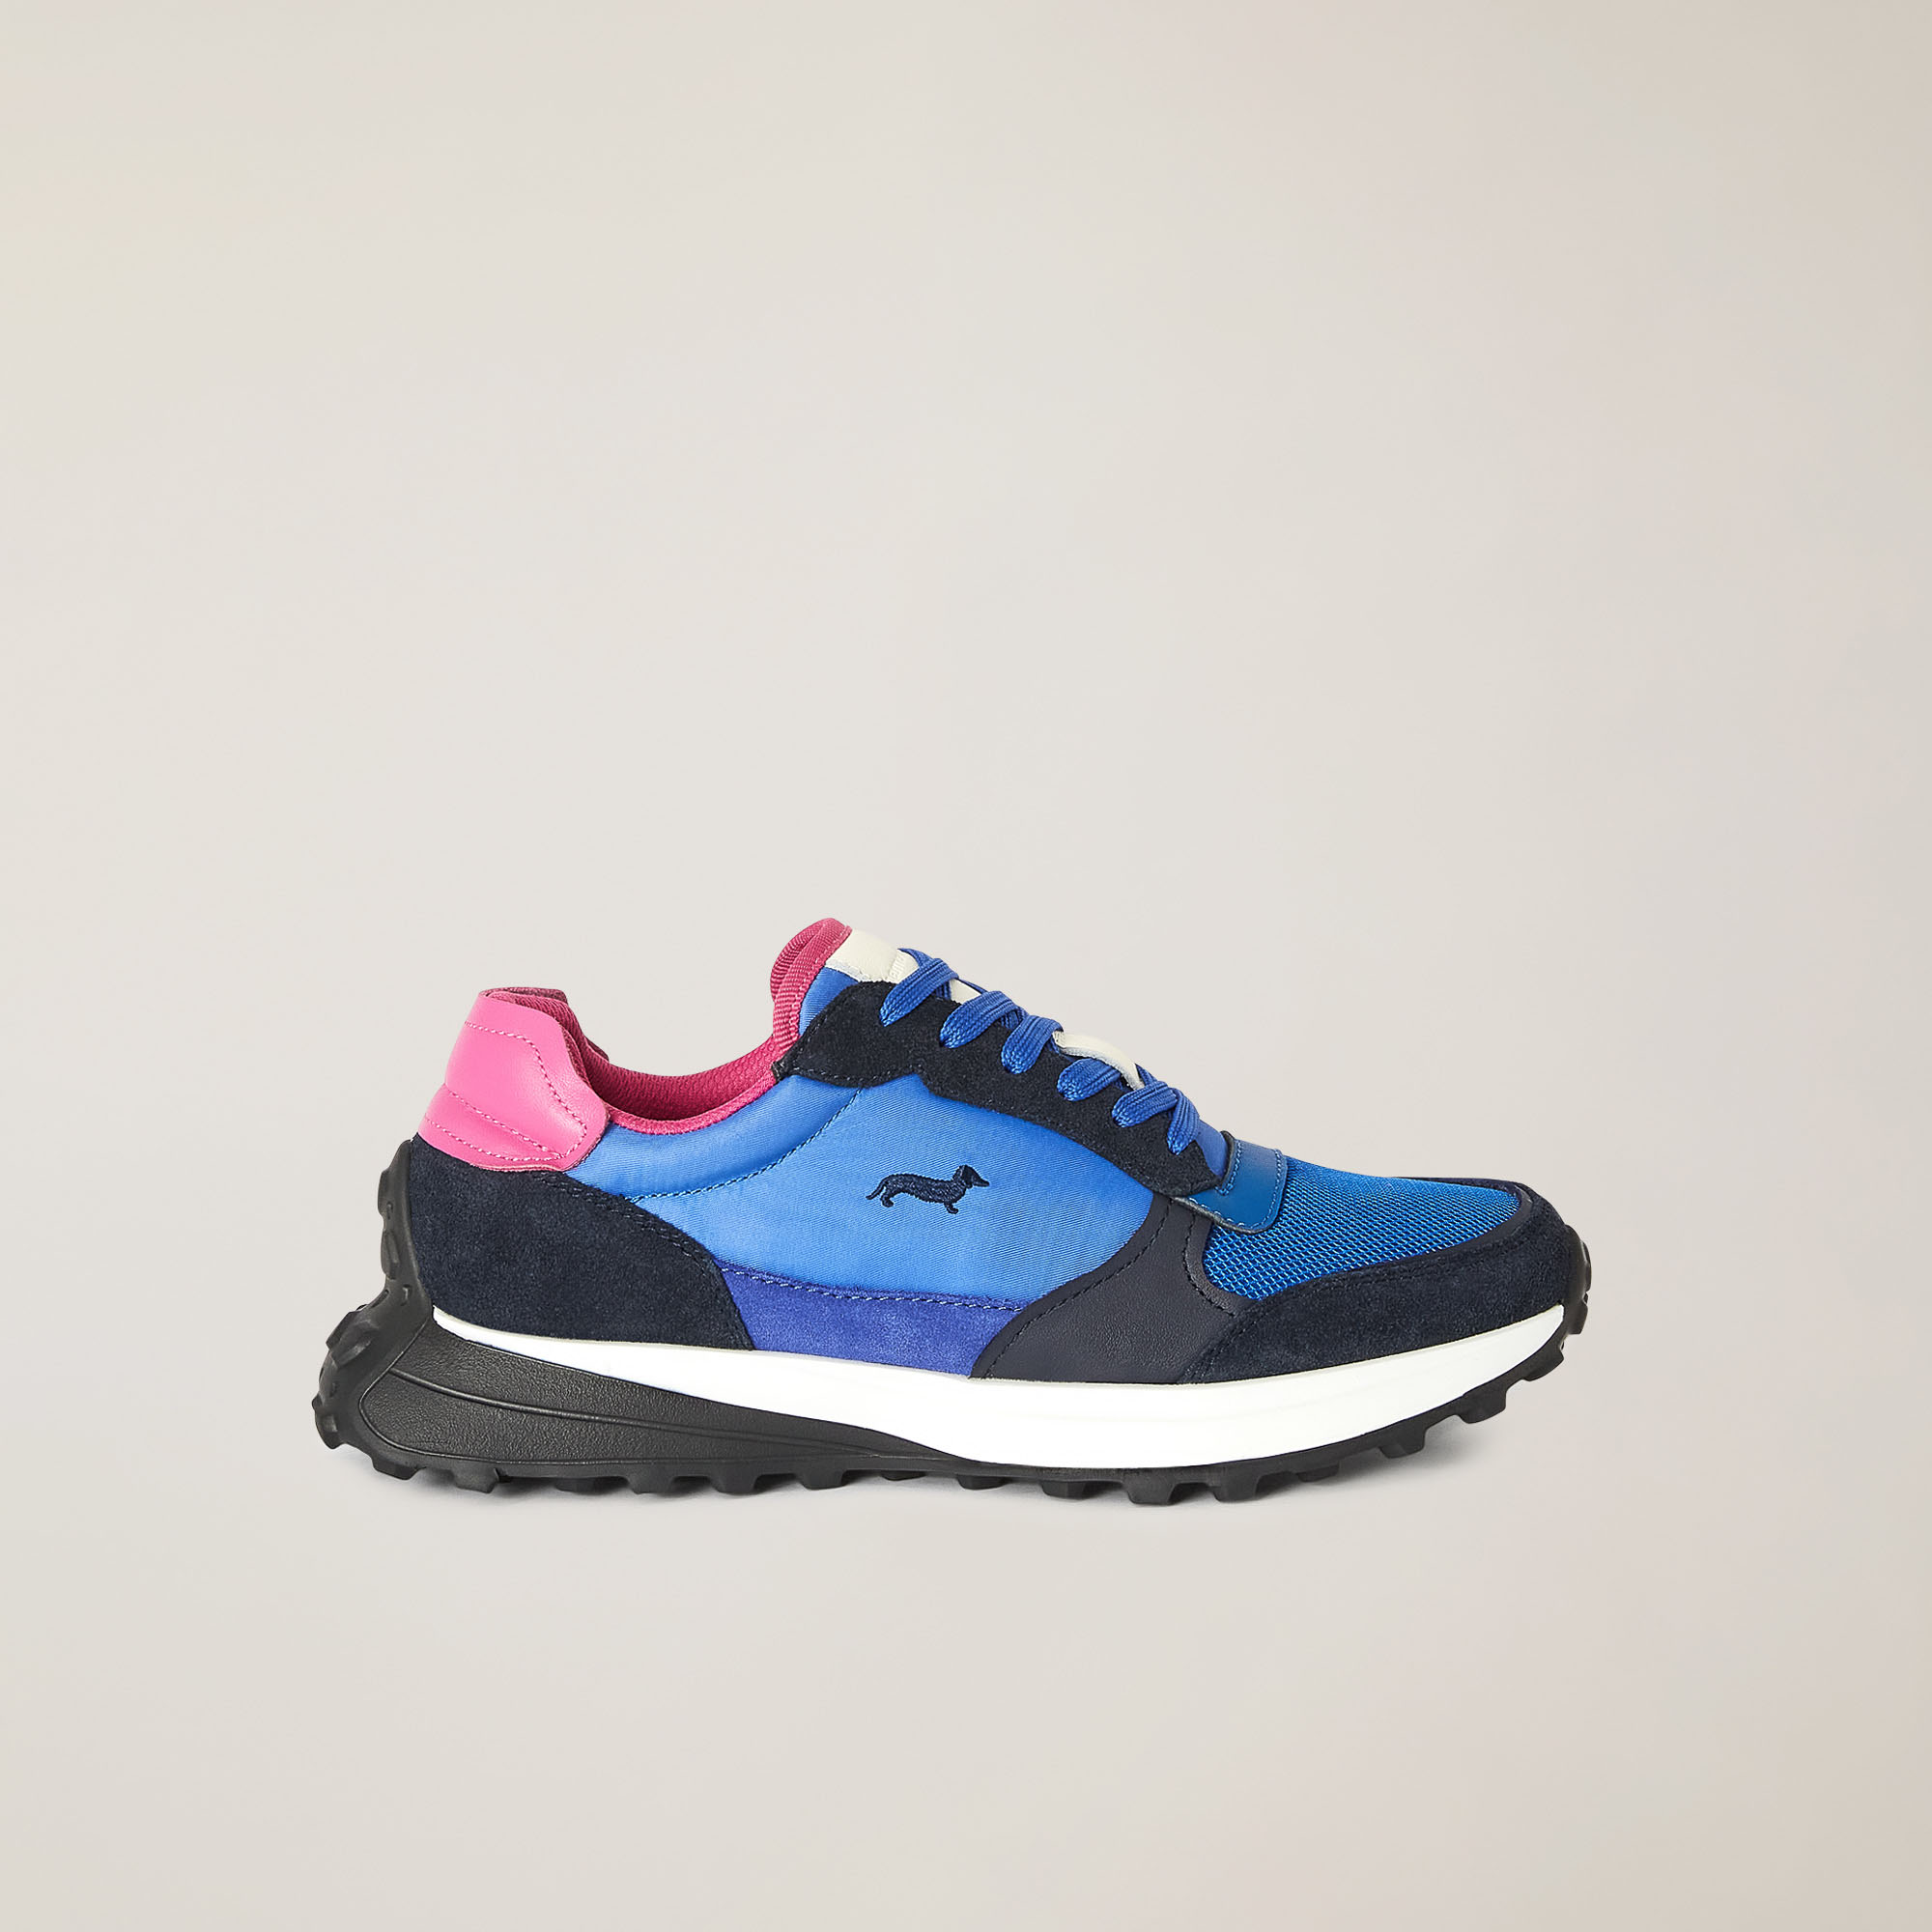 Mixed-Material Ultra Lightweight Running Sneakers, Cobalt blue/Pink, large